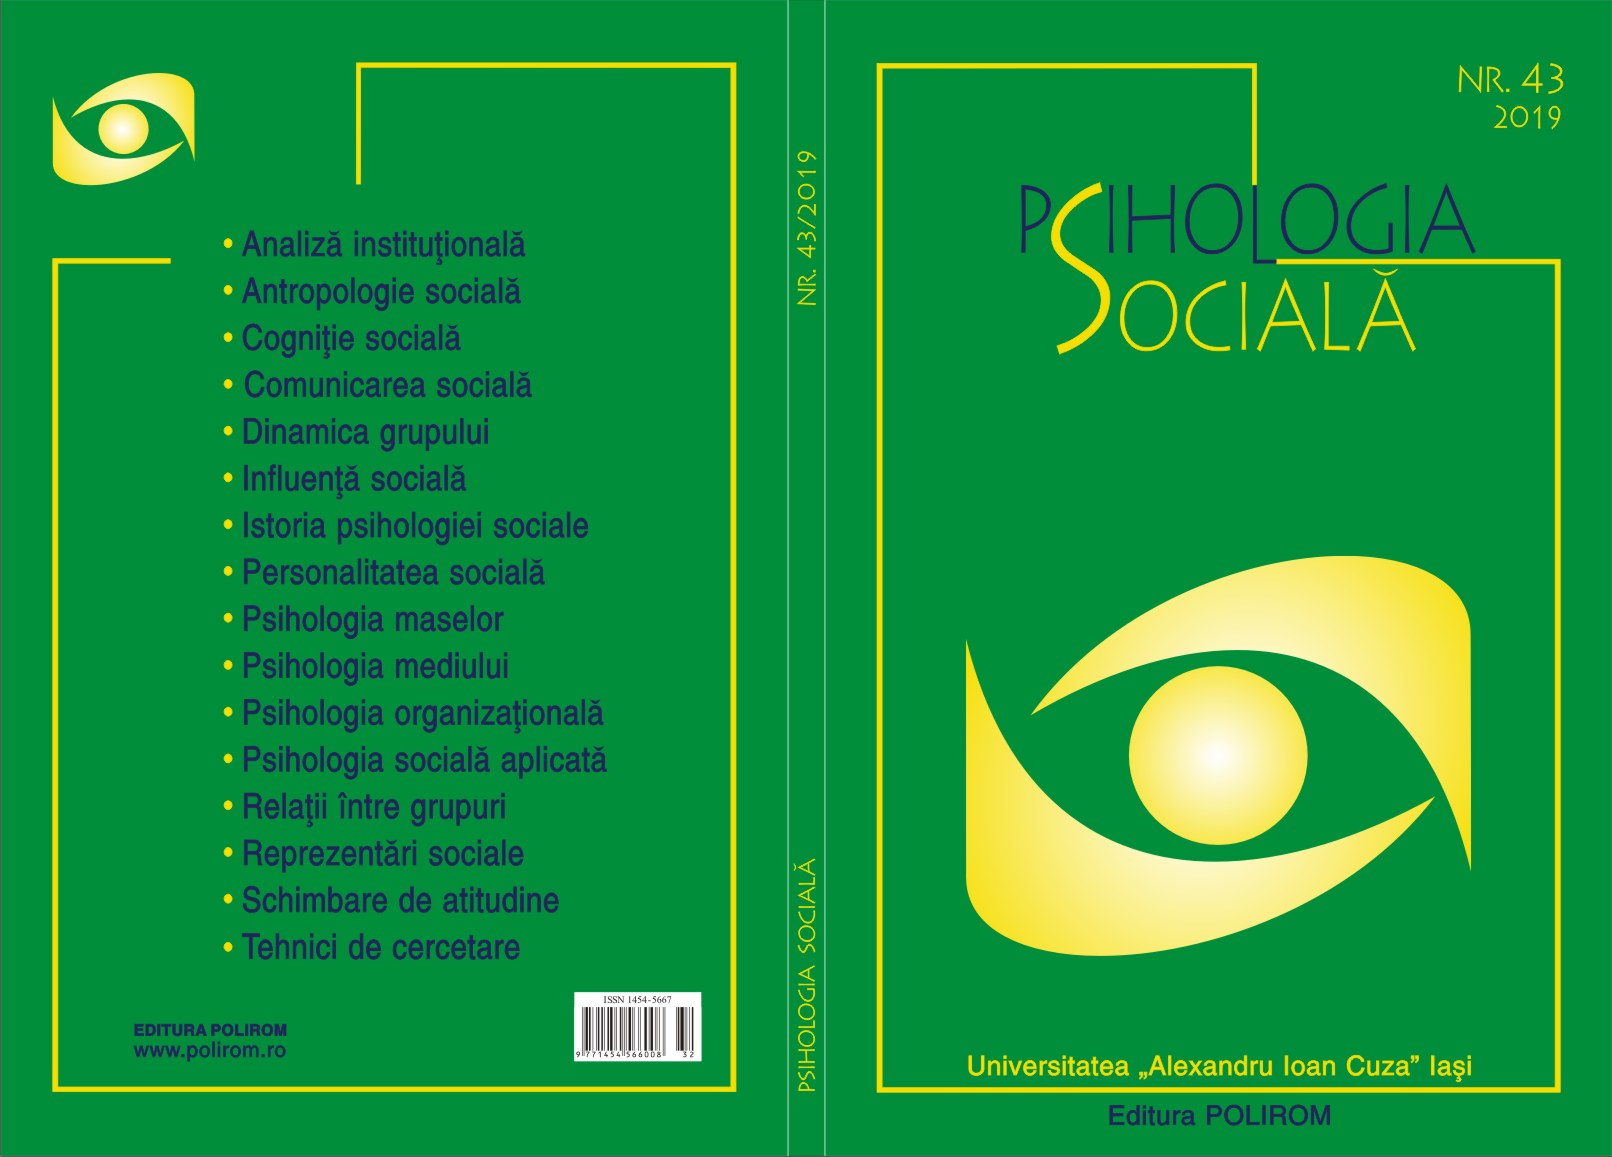 Mihai Şleahtiţchi, Treaty of structural analysis of social representations, Chişinău, Editura Ştiinţa, 2016 Cover Image